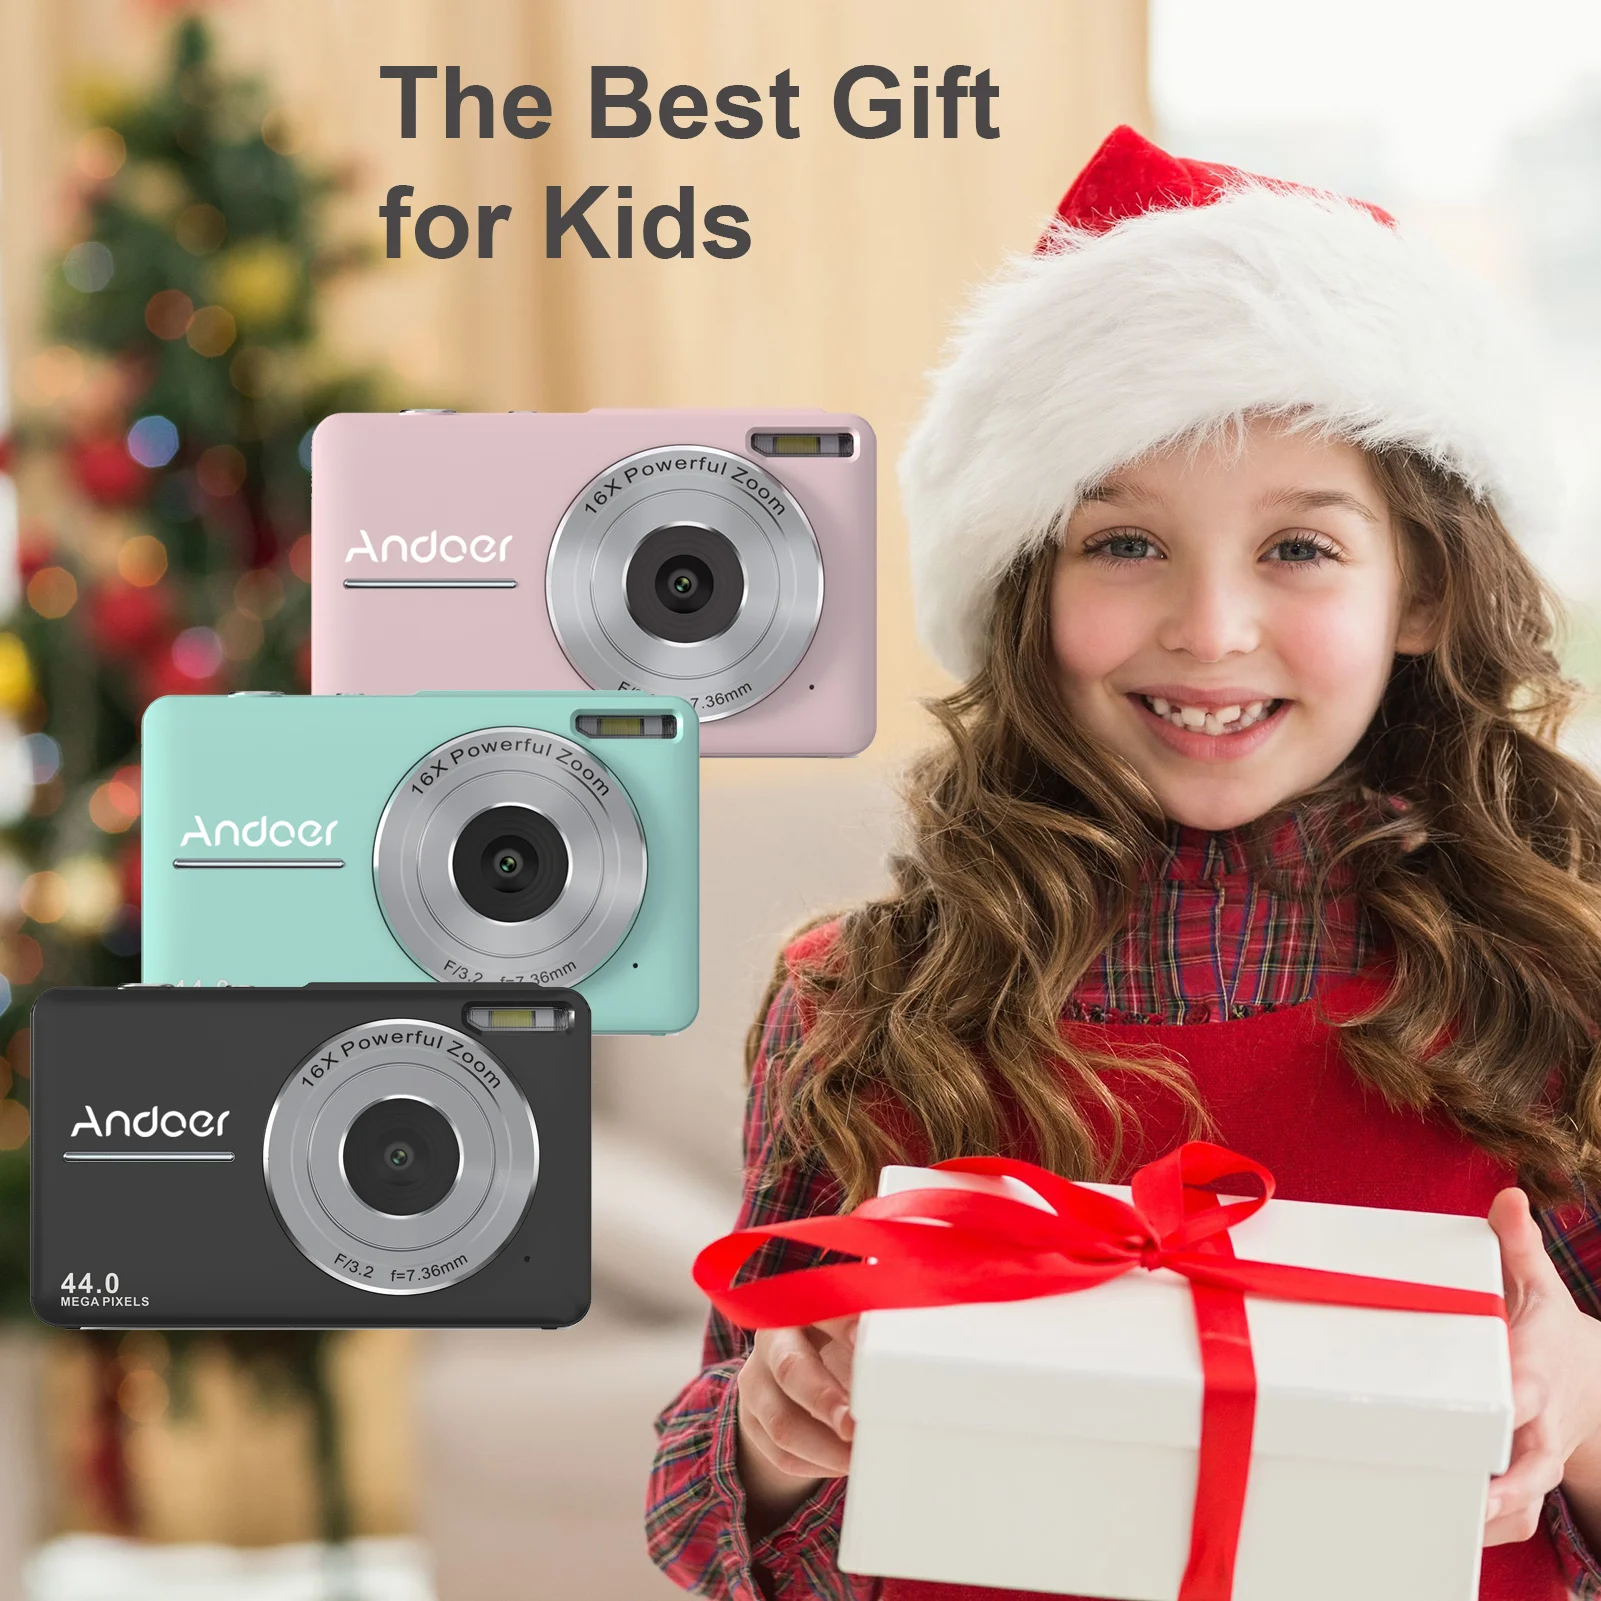 Andoer Digital Video Camera Portable Digital Camera 1080P 44MP 16X Digital Zoom Video Camcorder Birthday Christmas Gift for Kids